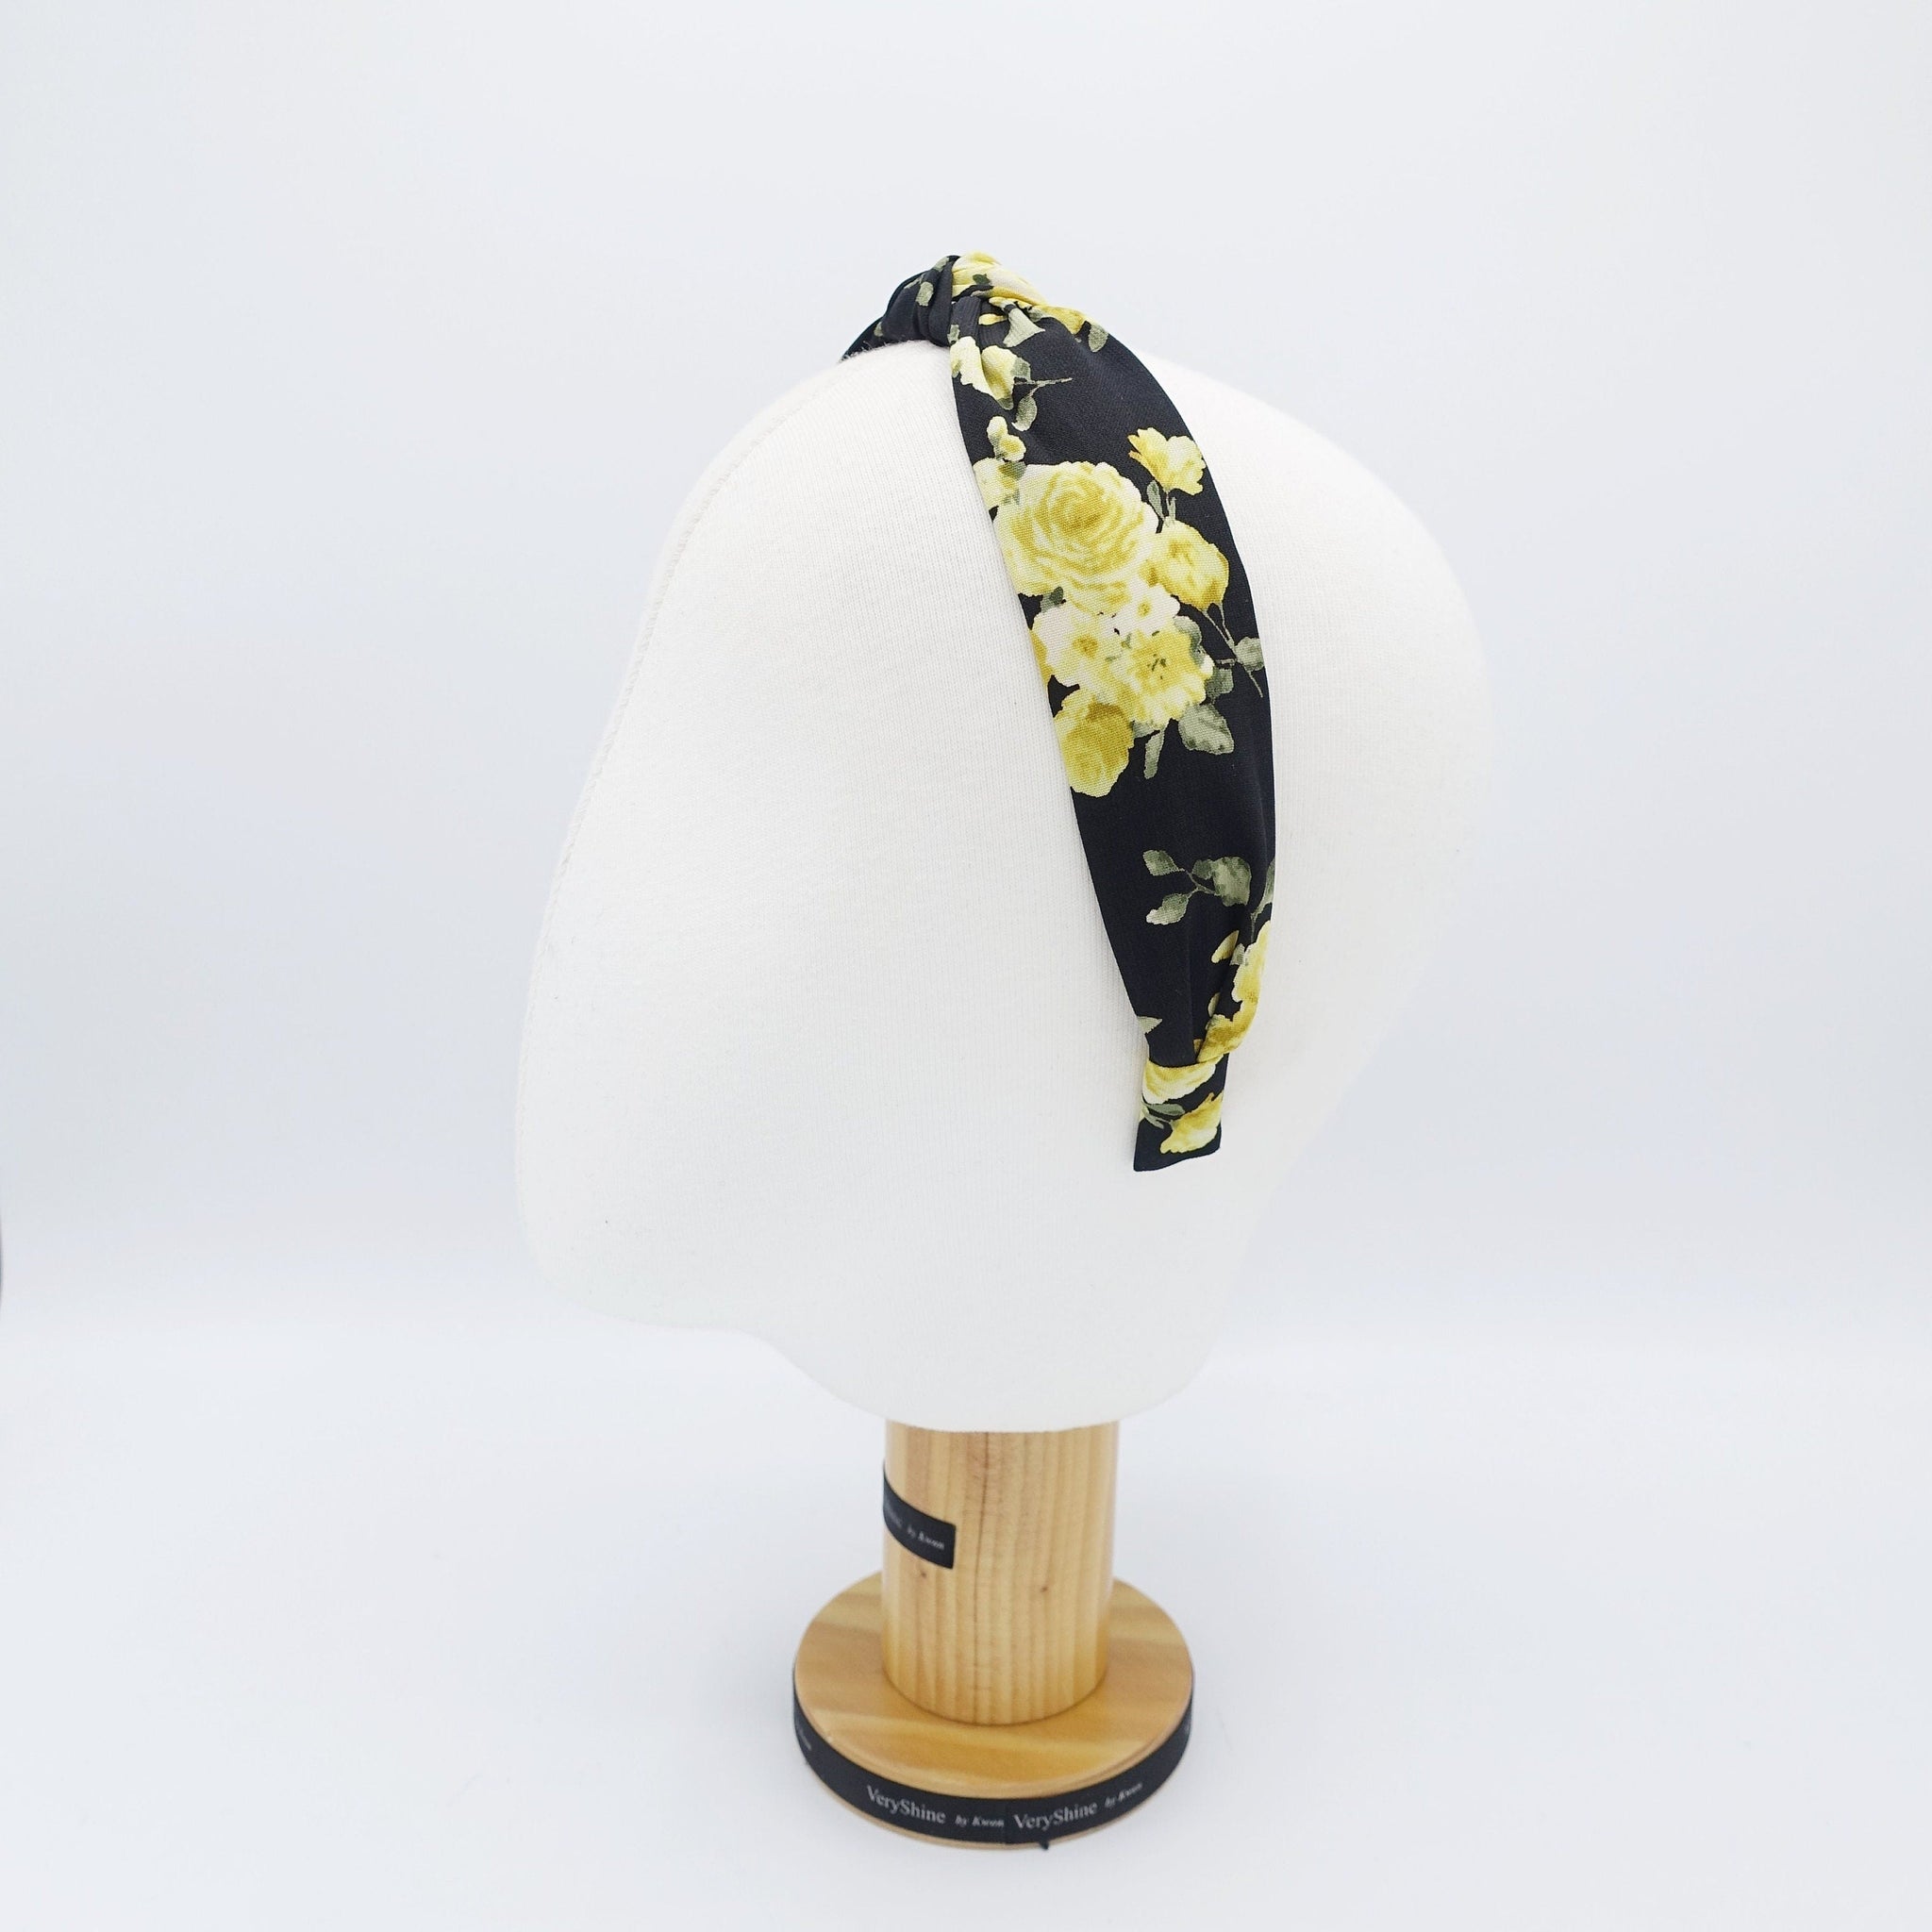 veryshine.com Headband narrow headband flower vine print knotted headband floral thin hairband women hair accessory